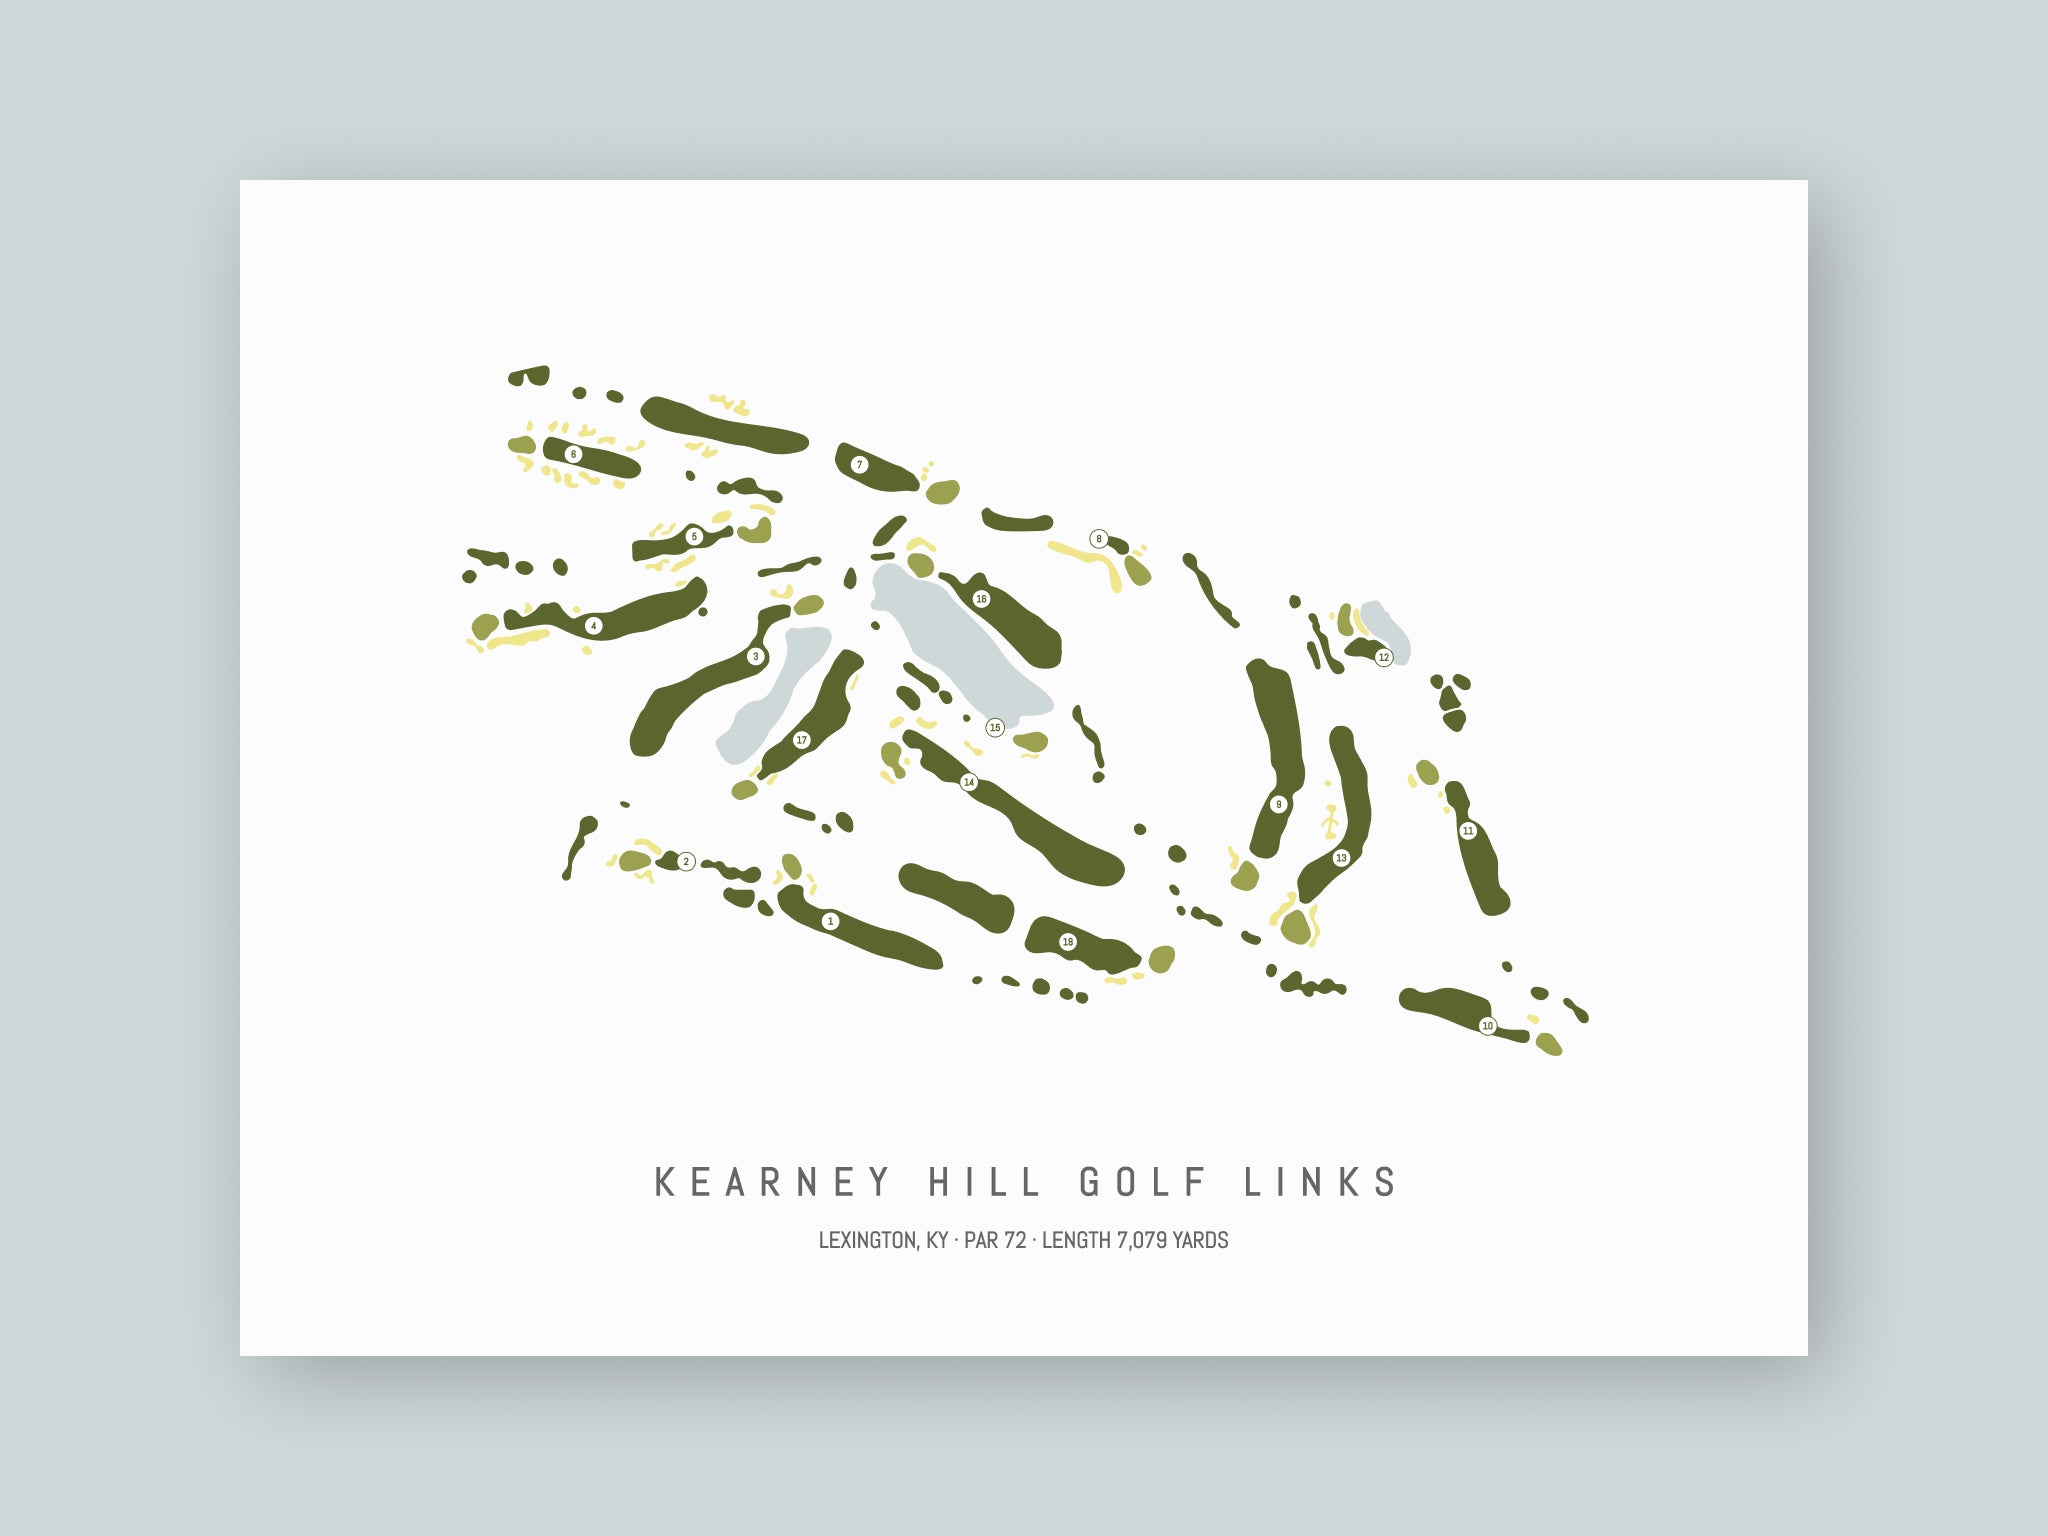 Kearney-Hill-Golf-Links-KY--Unframed-24x18-With-Hole-Numbers